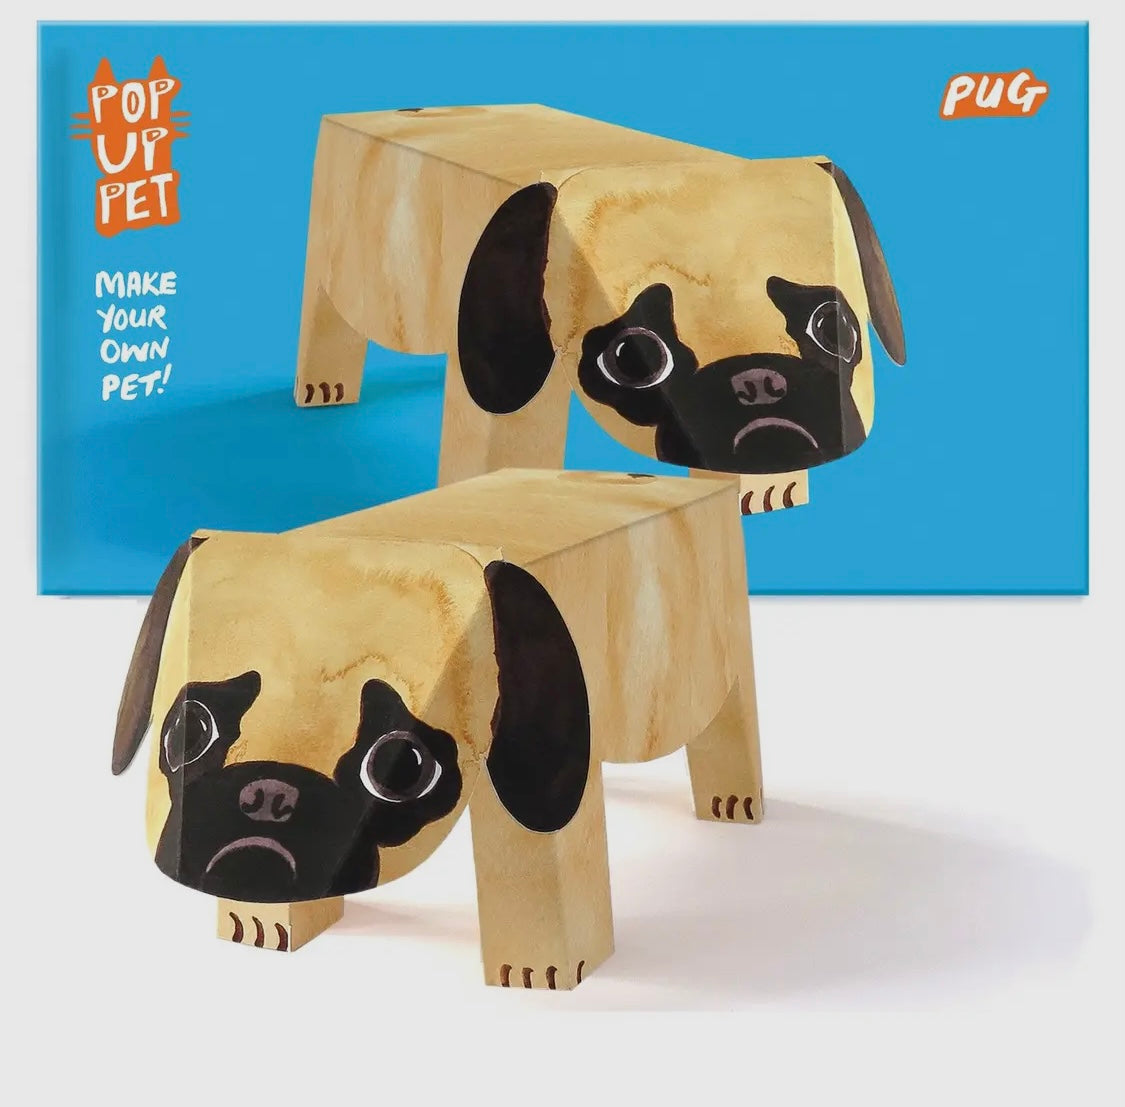 Pop Up Pet - Pug - Paper Pet Gift